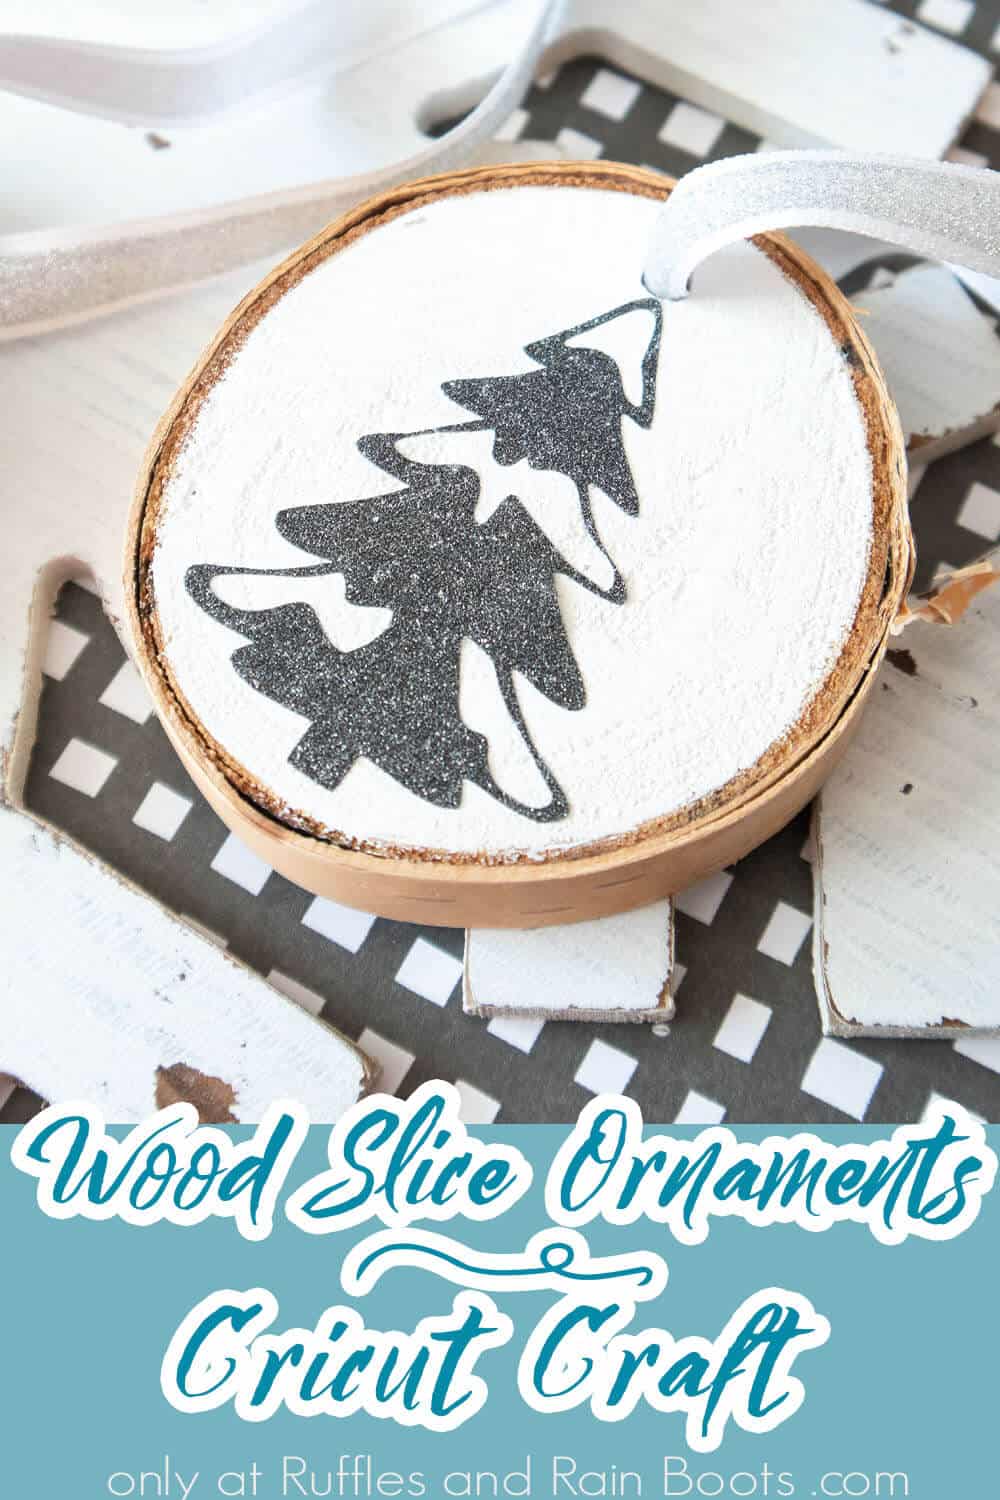 DIY wood slice ornaments with glitter cricut craft with text which reads wood slice ornaments cricut craft